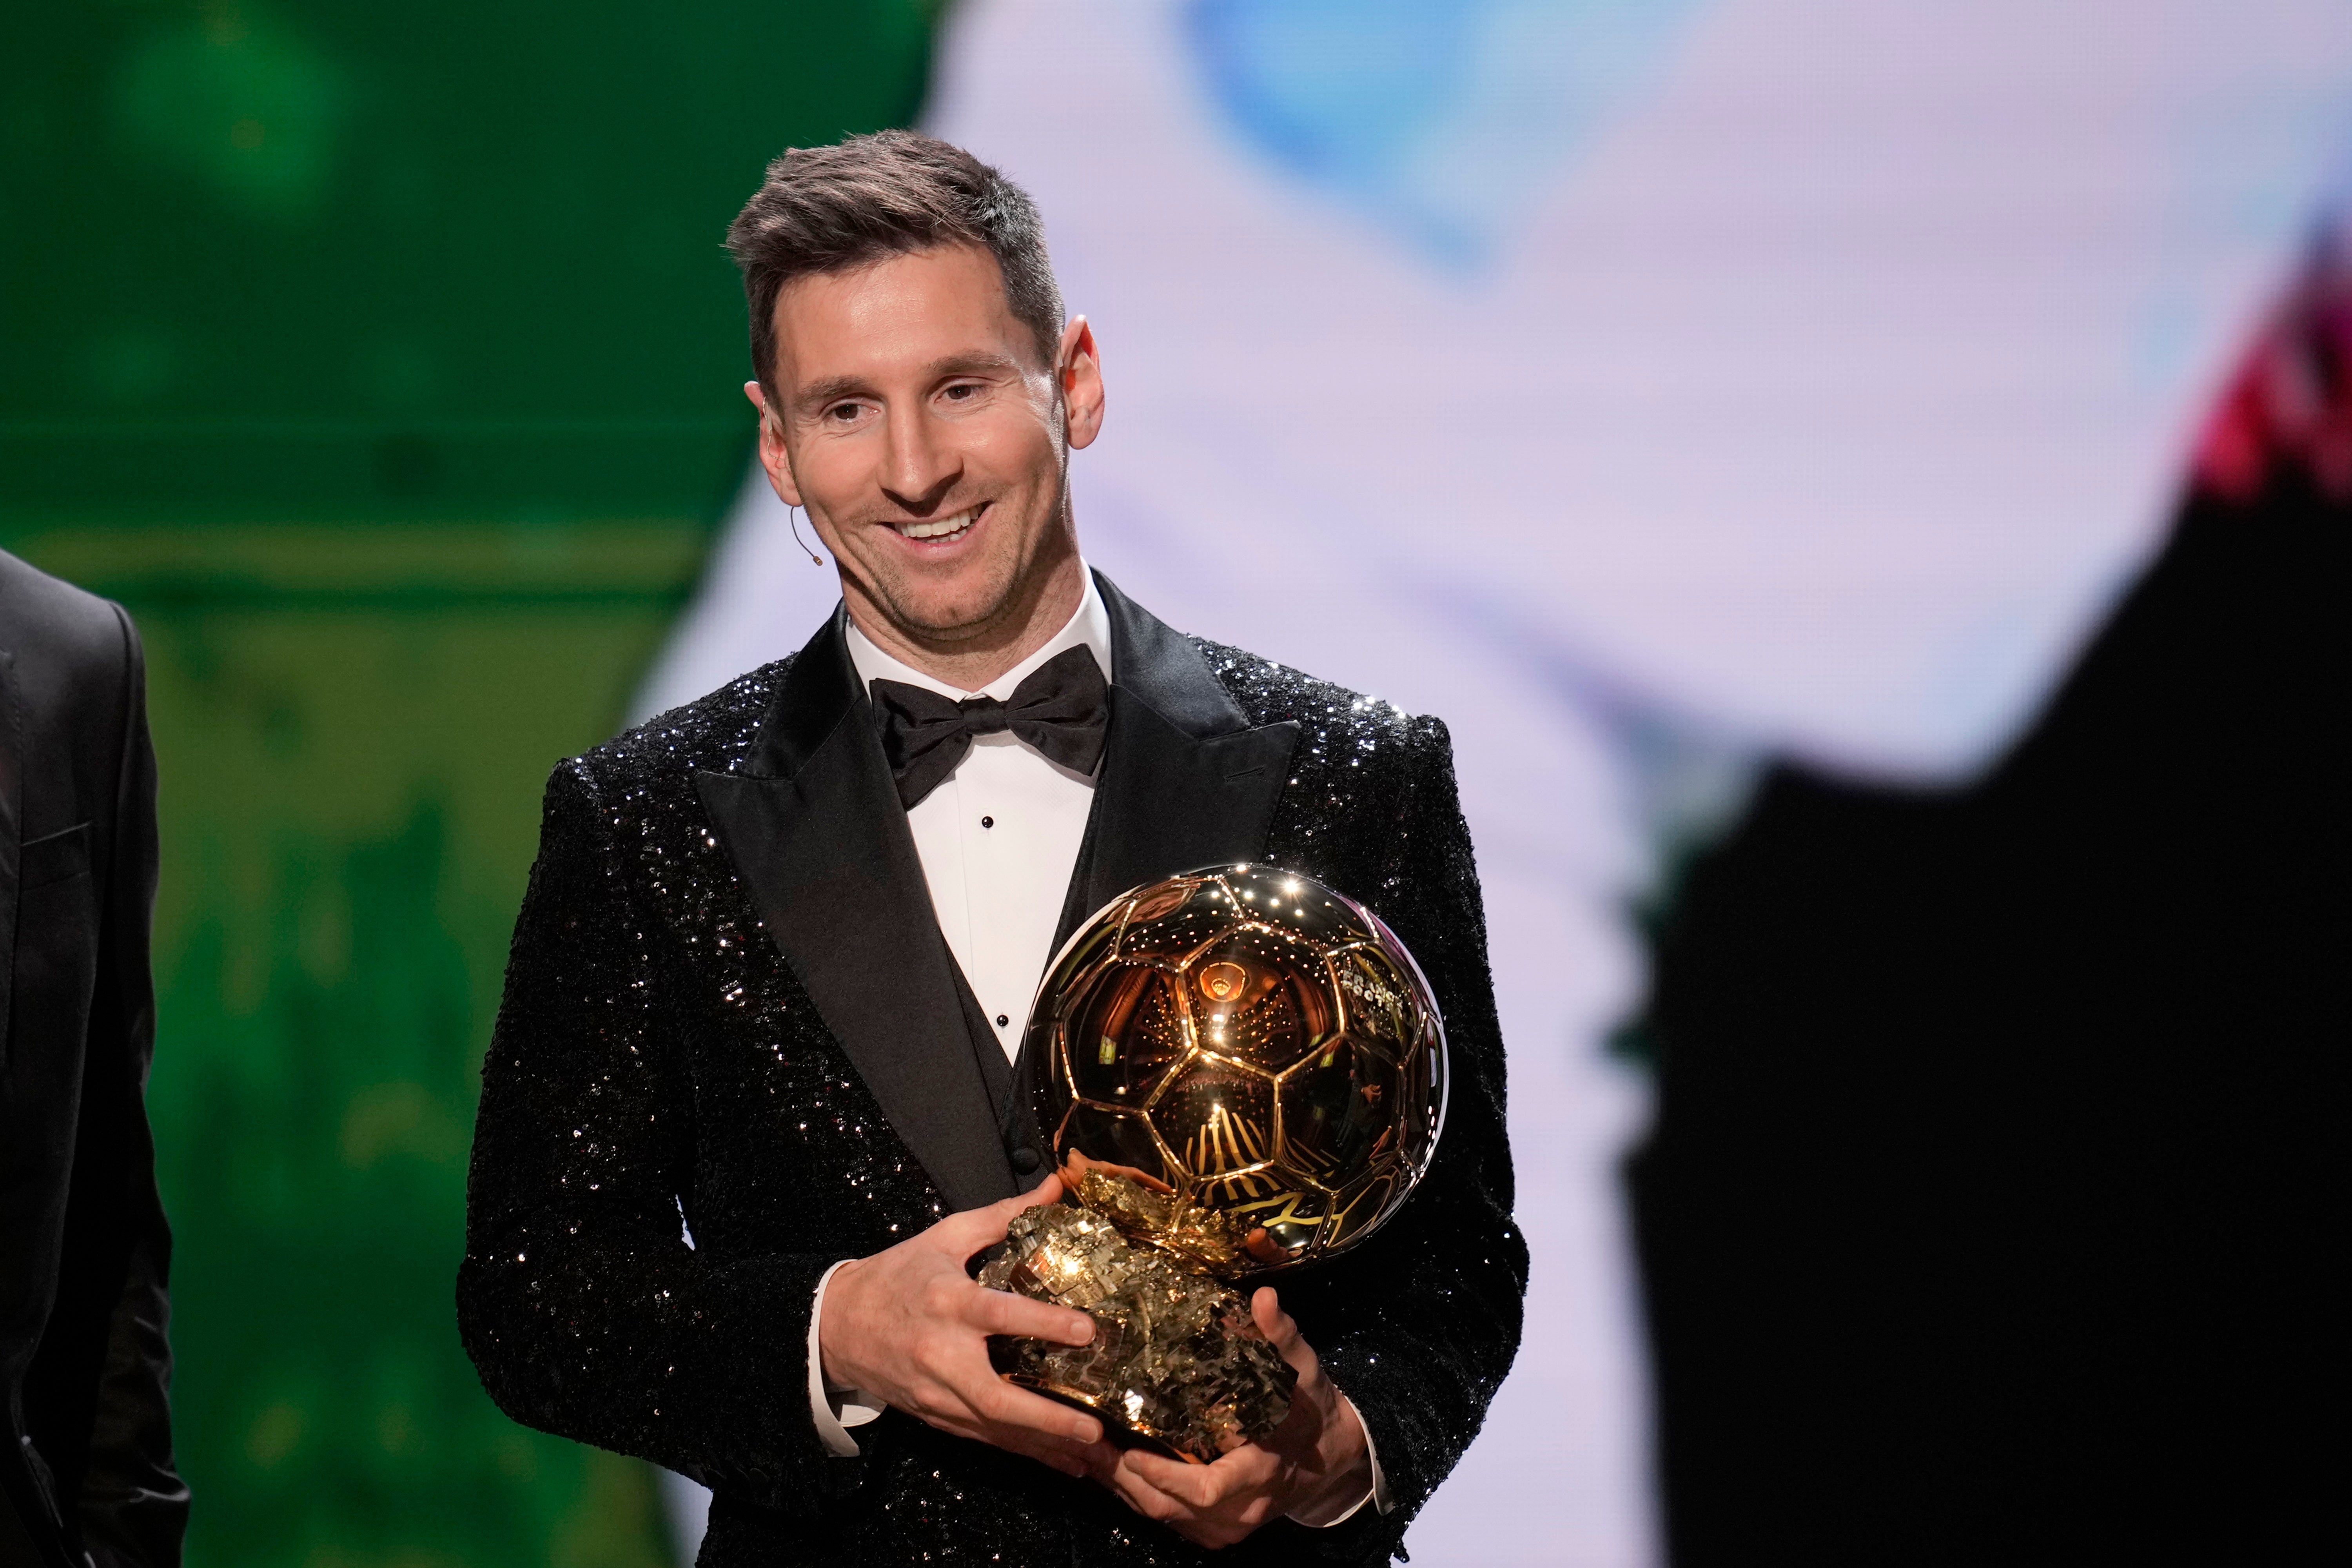 Ballon dOr 2021 LIVE results as Lionel Messi beats Robert Lewandowski and Jorginho to make history The Independent